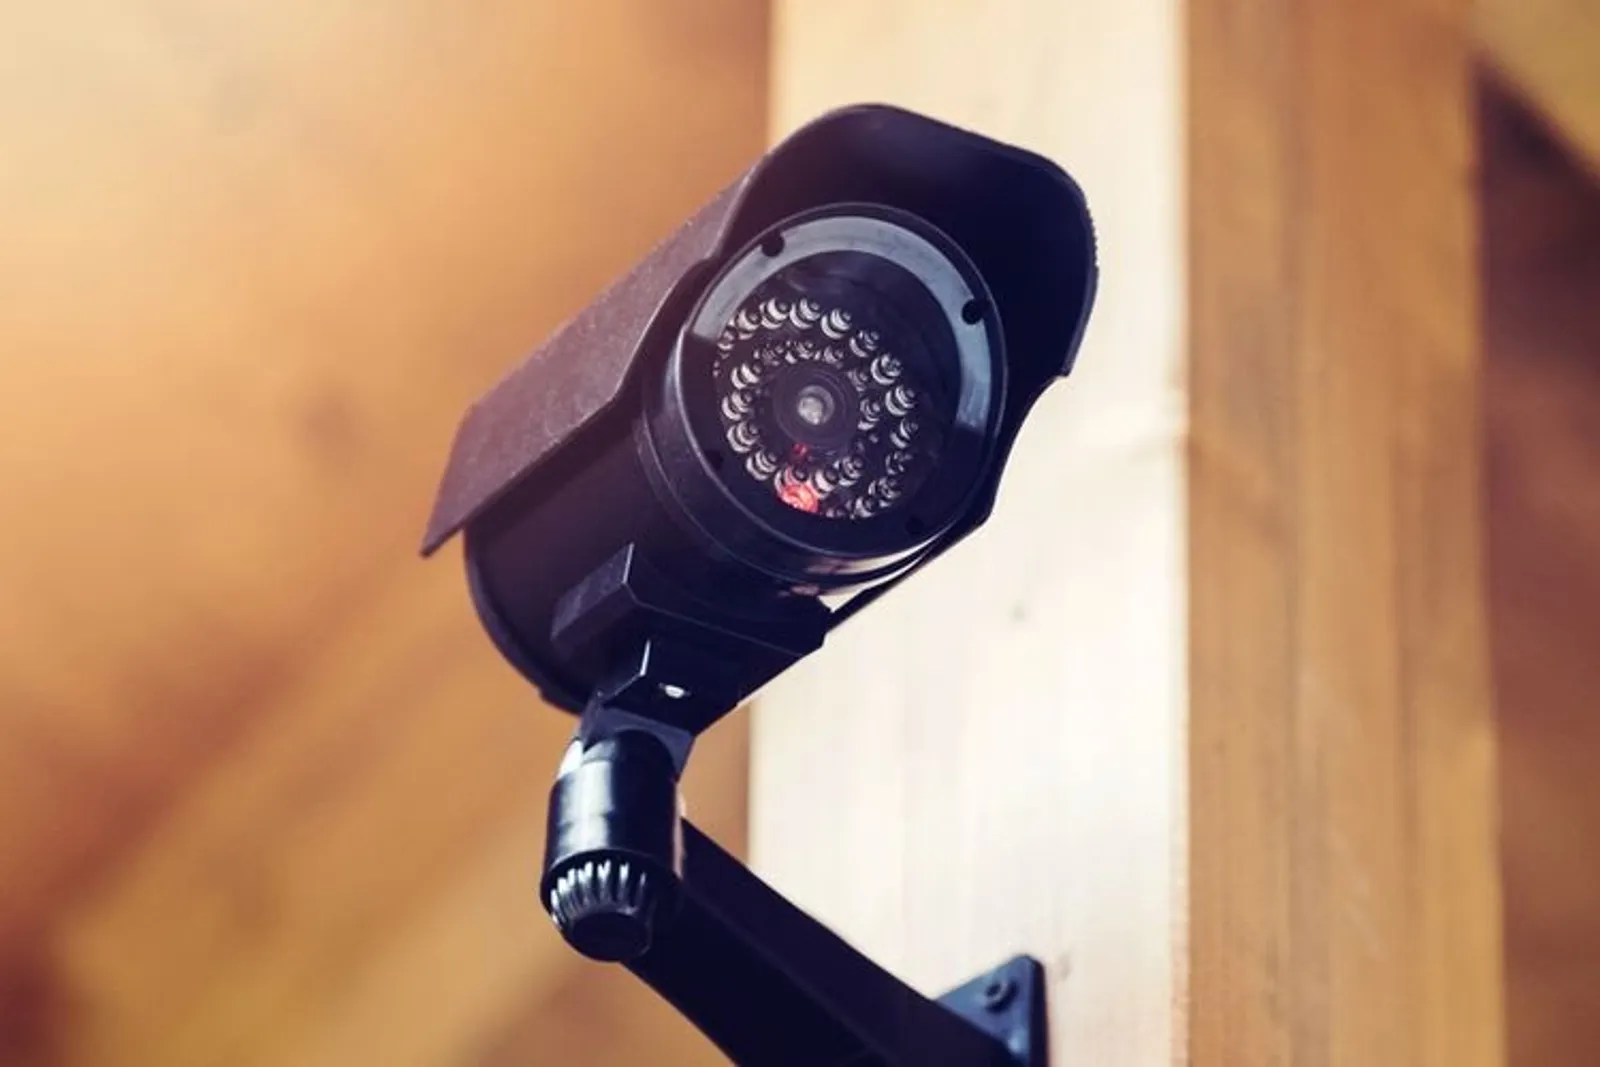 6 Tempat Terbaik untuk Memasang CCTV di Rumah, Terpantau dengan Jelas